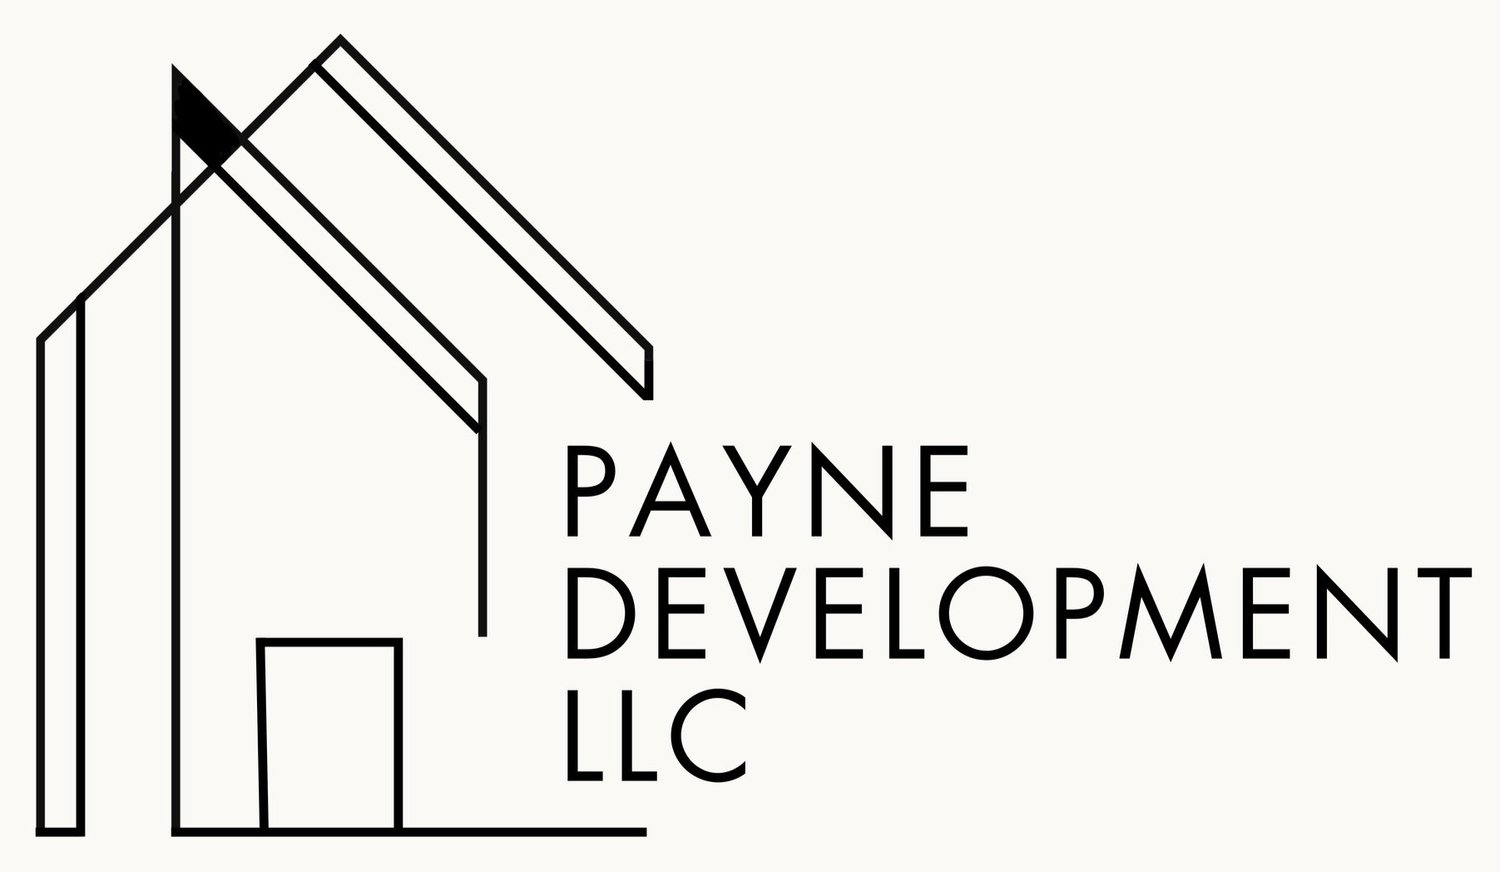 PAYNE DEVELOPMENT LLC